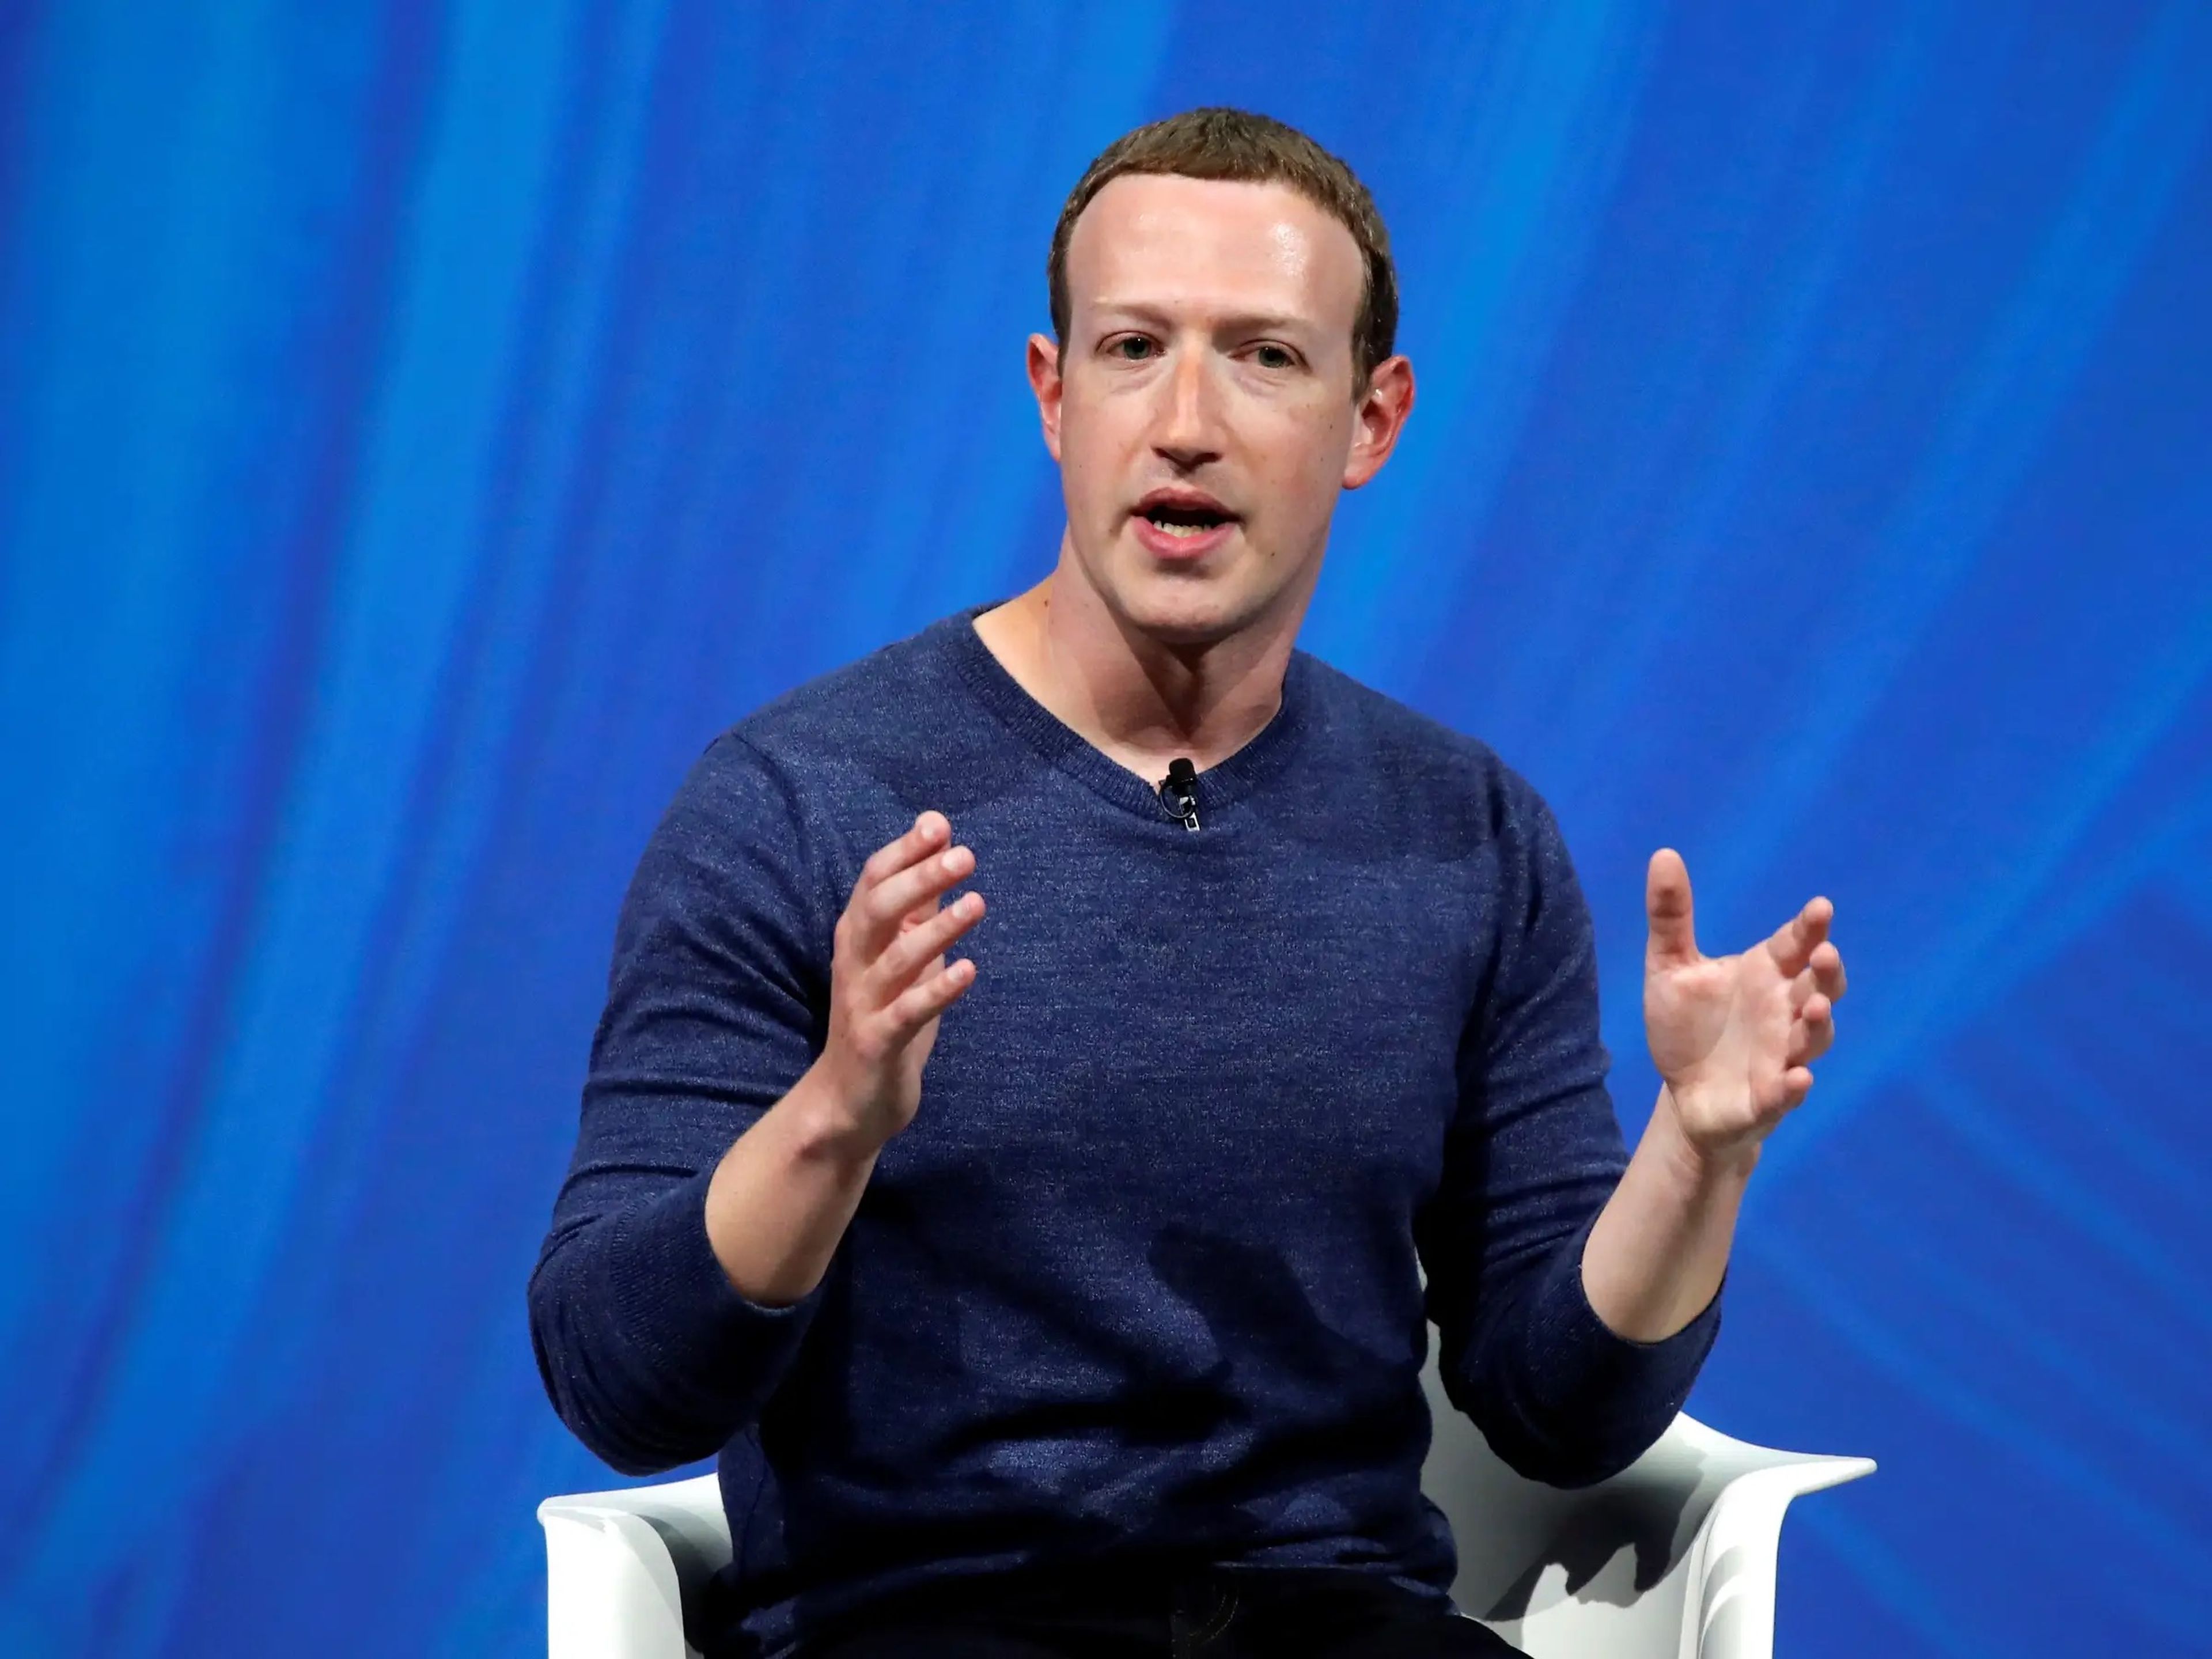 Mark Zuckerberg speaks on stage against a blue background.